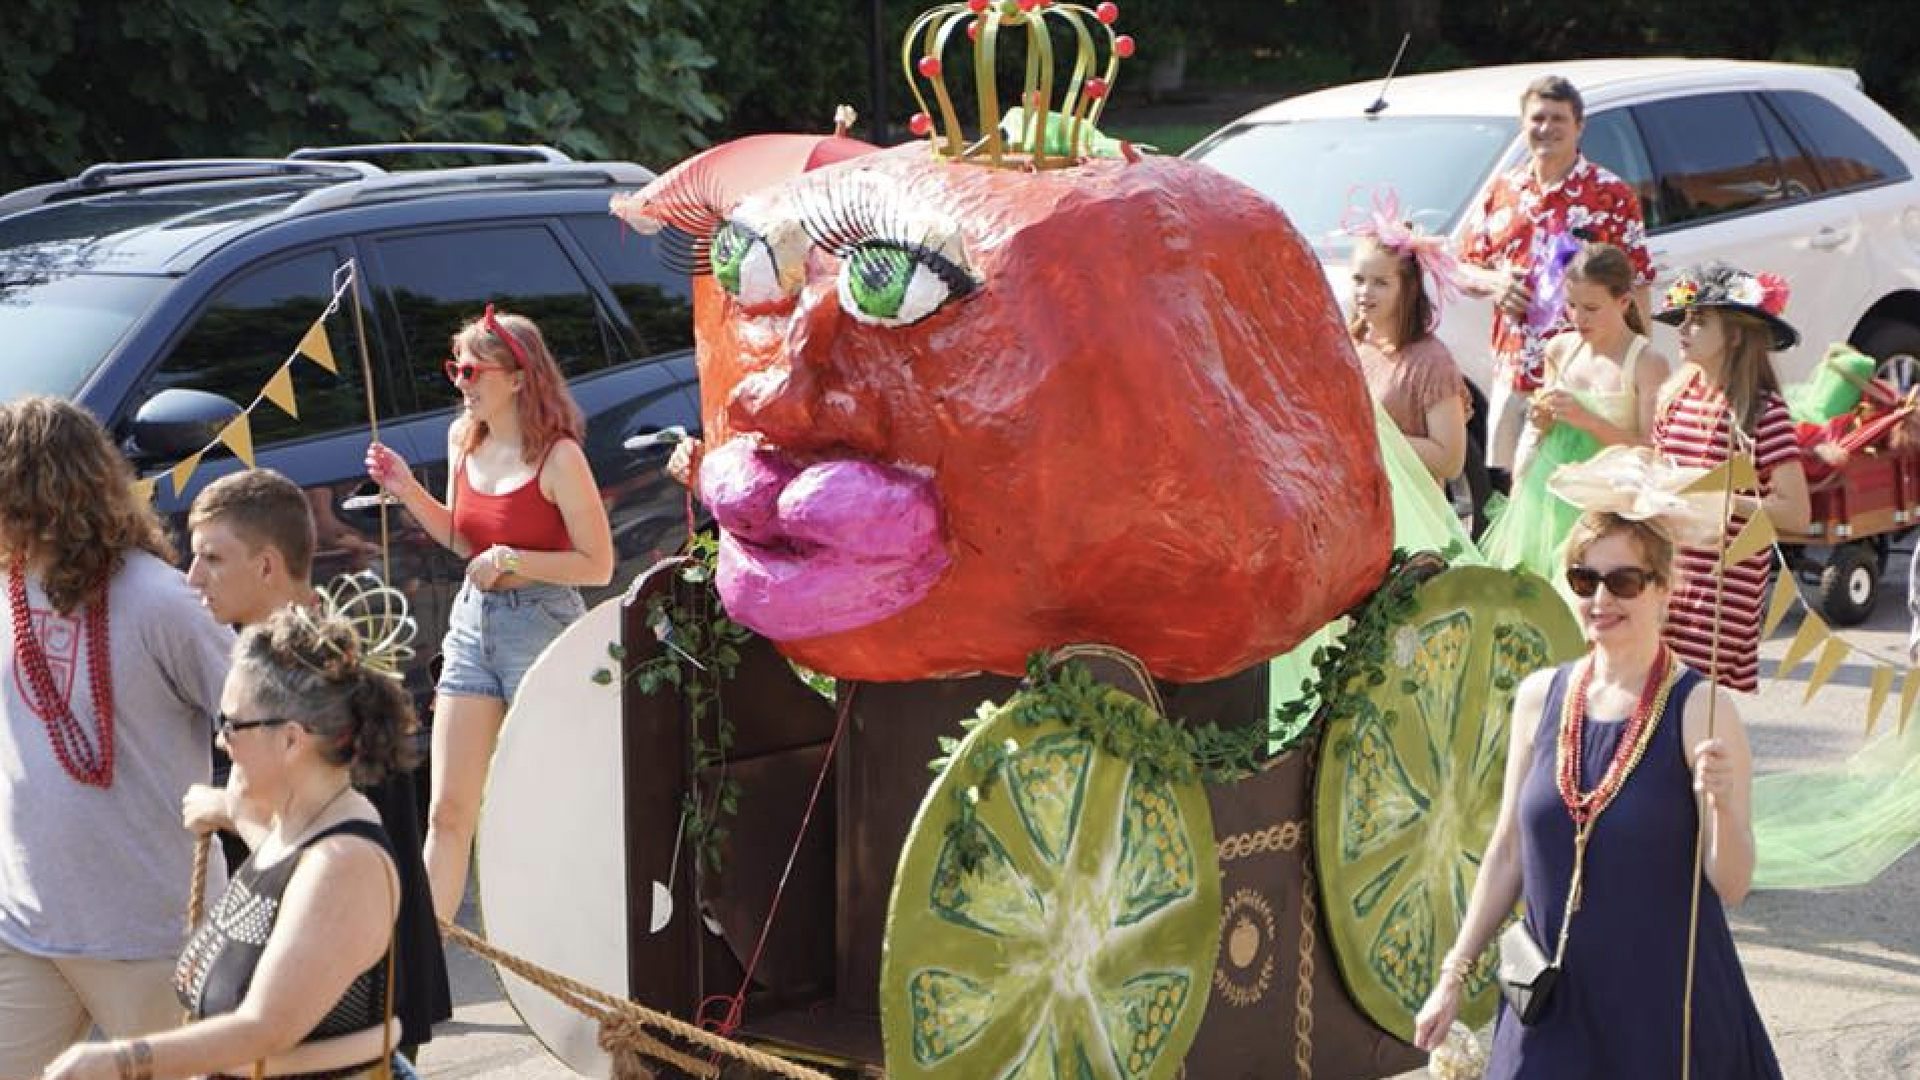 A Tomato shaped parade float